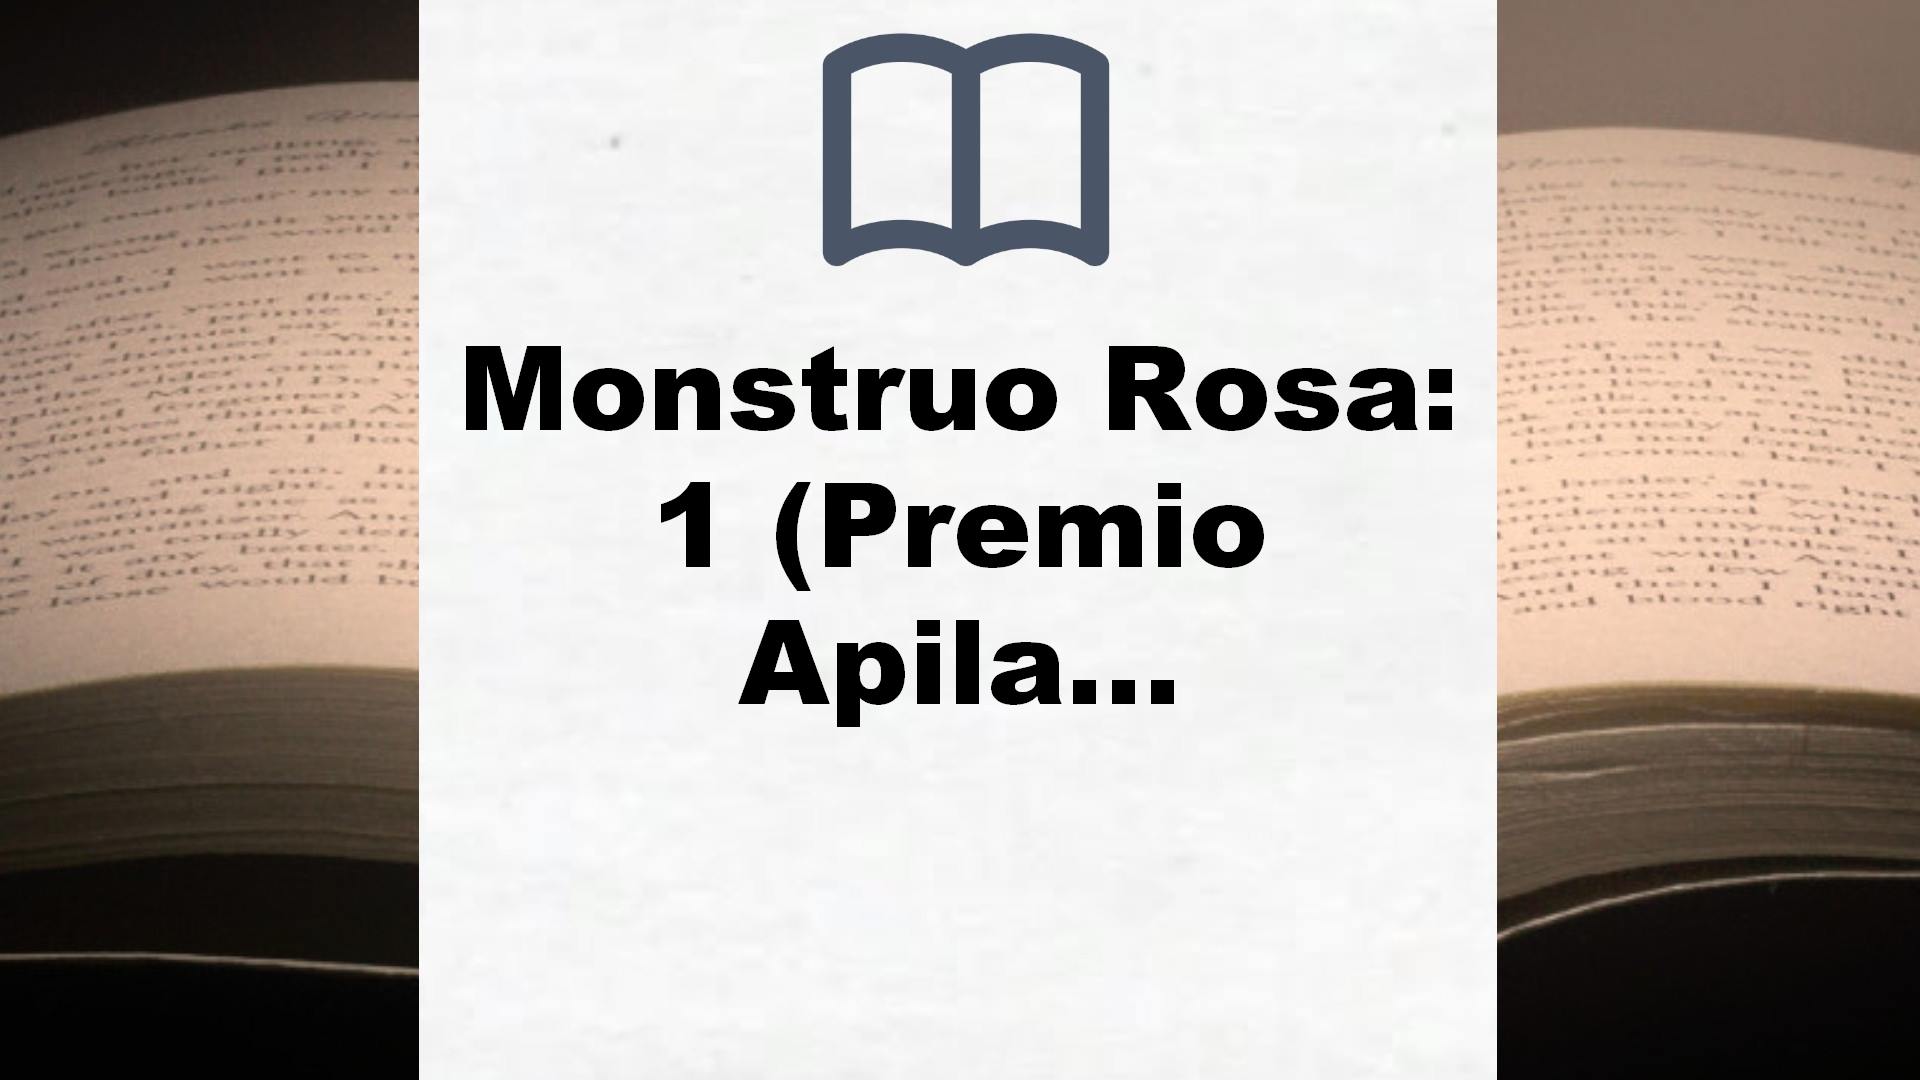 Monstruo Rosa: 1 (Premio Apila Primera Impresión) – Reseña del libro